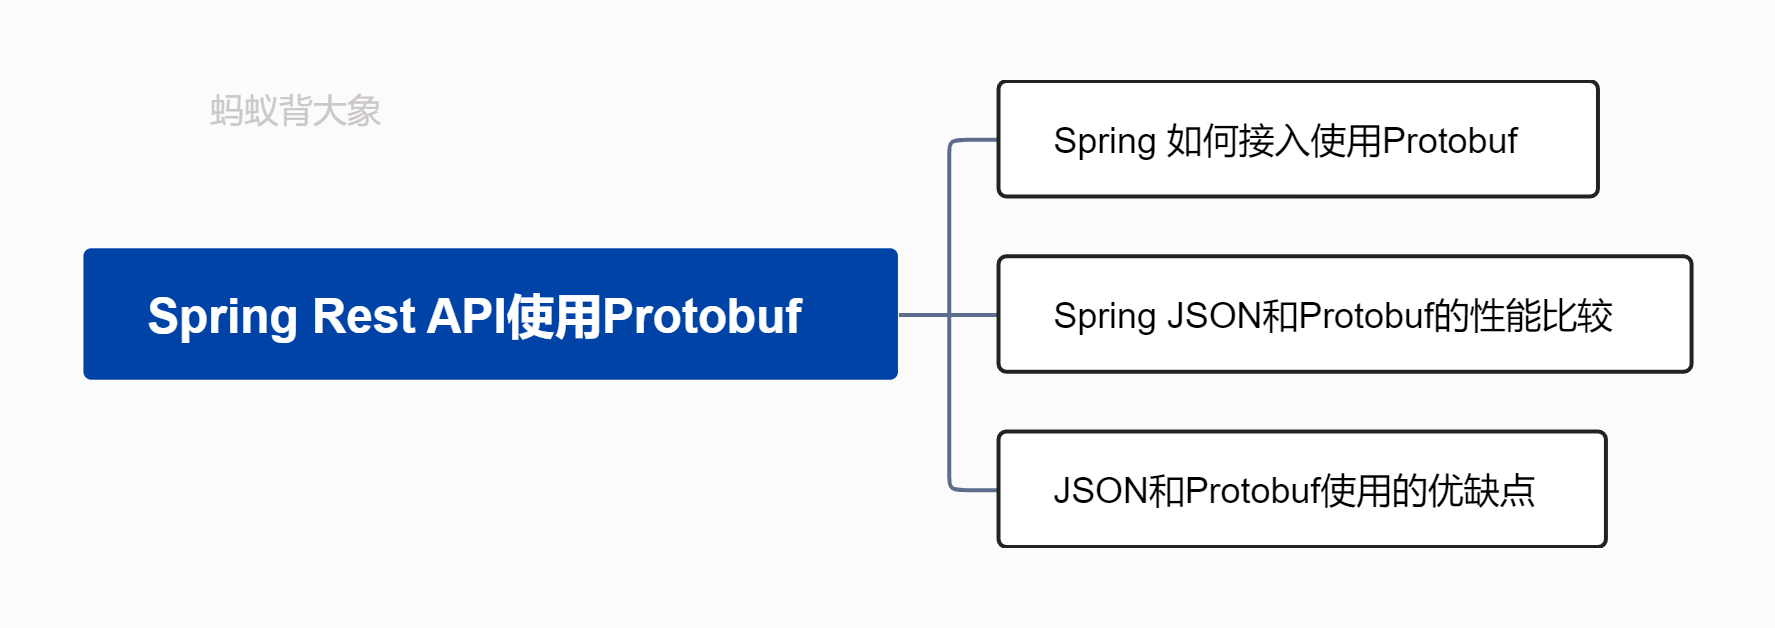 Spring Rest API使用Protobuf